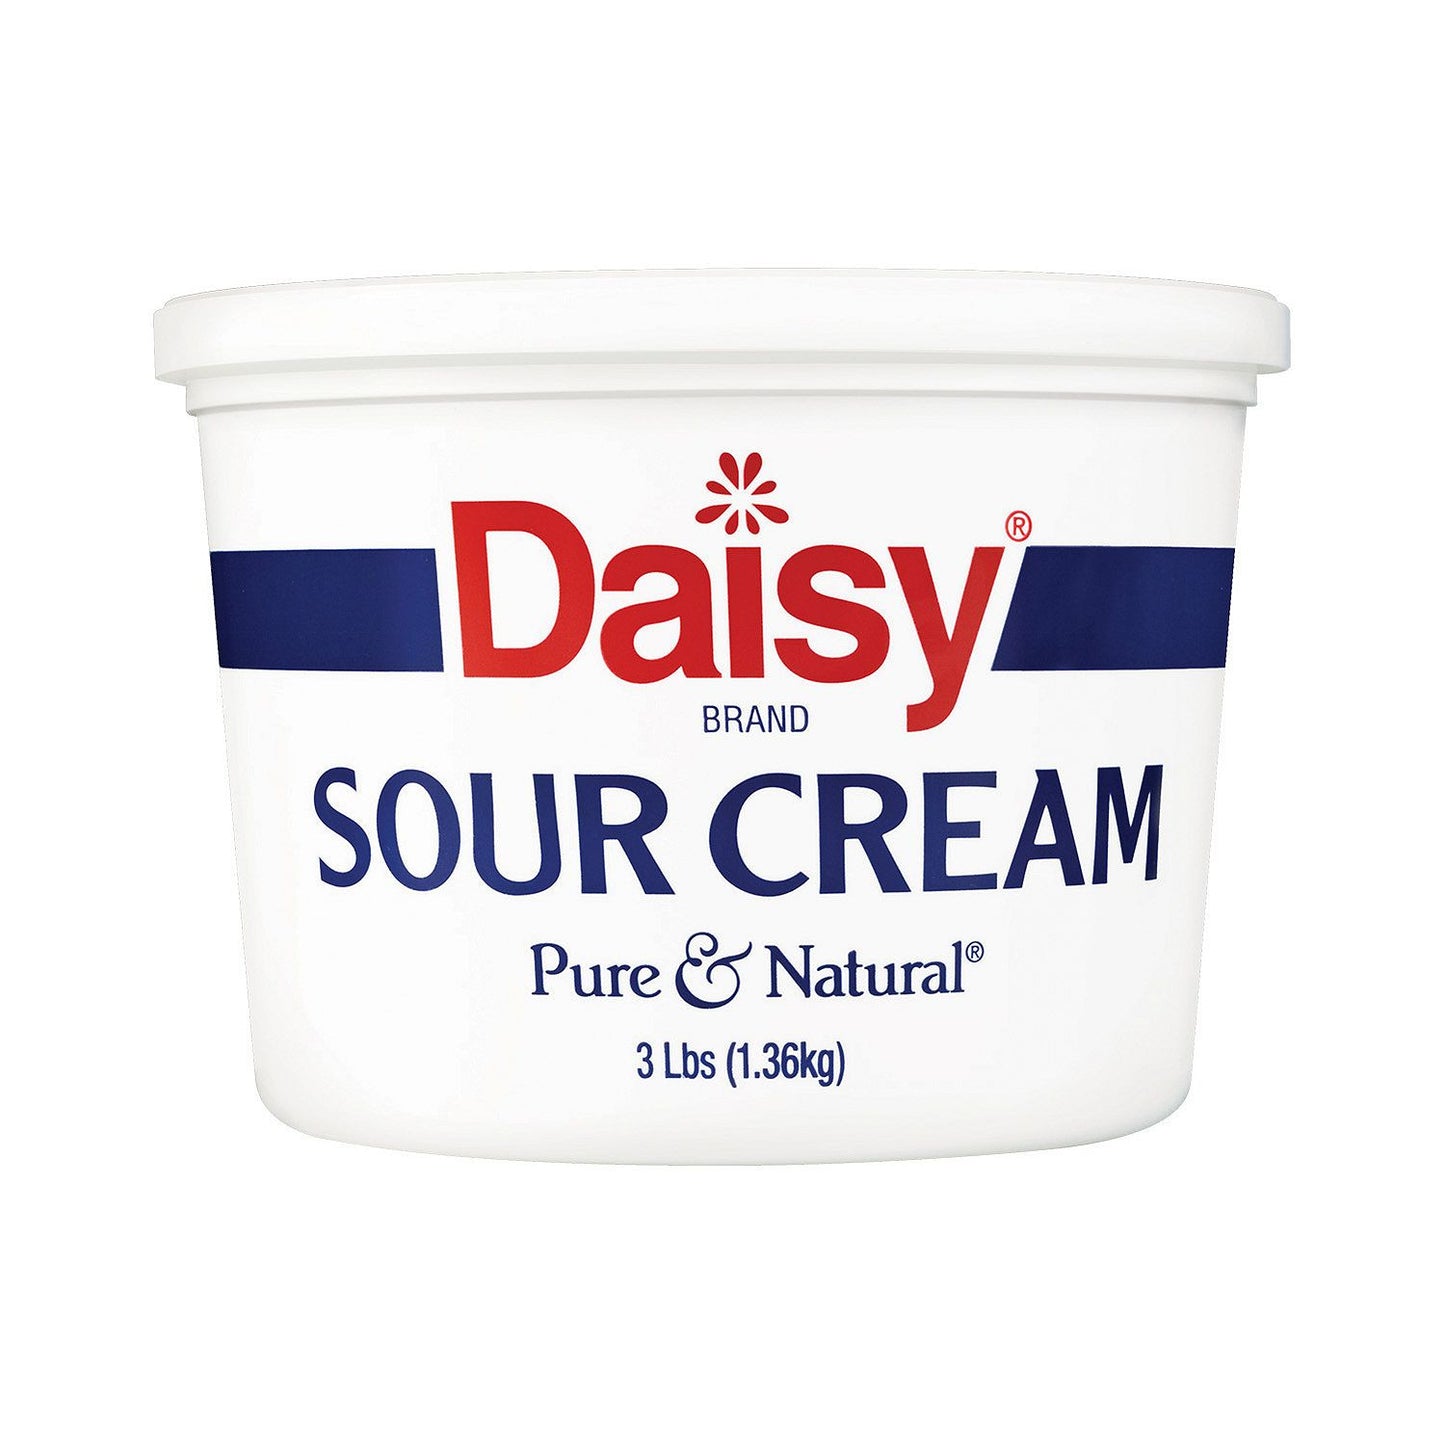 Daisy Brand Sour Cream Pure & Natural (3 lbs.)